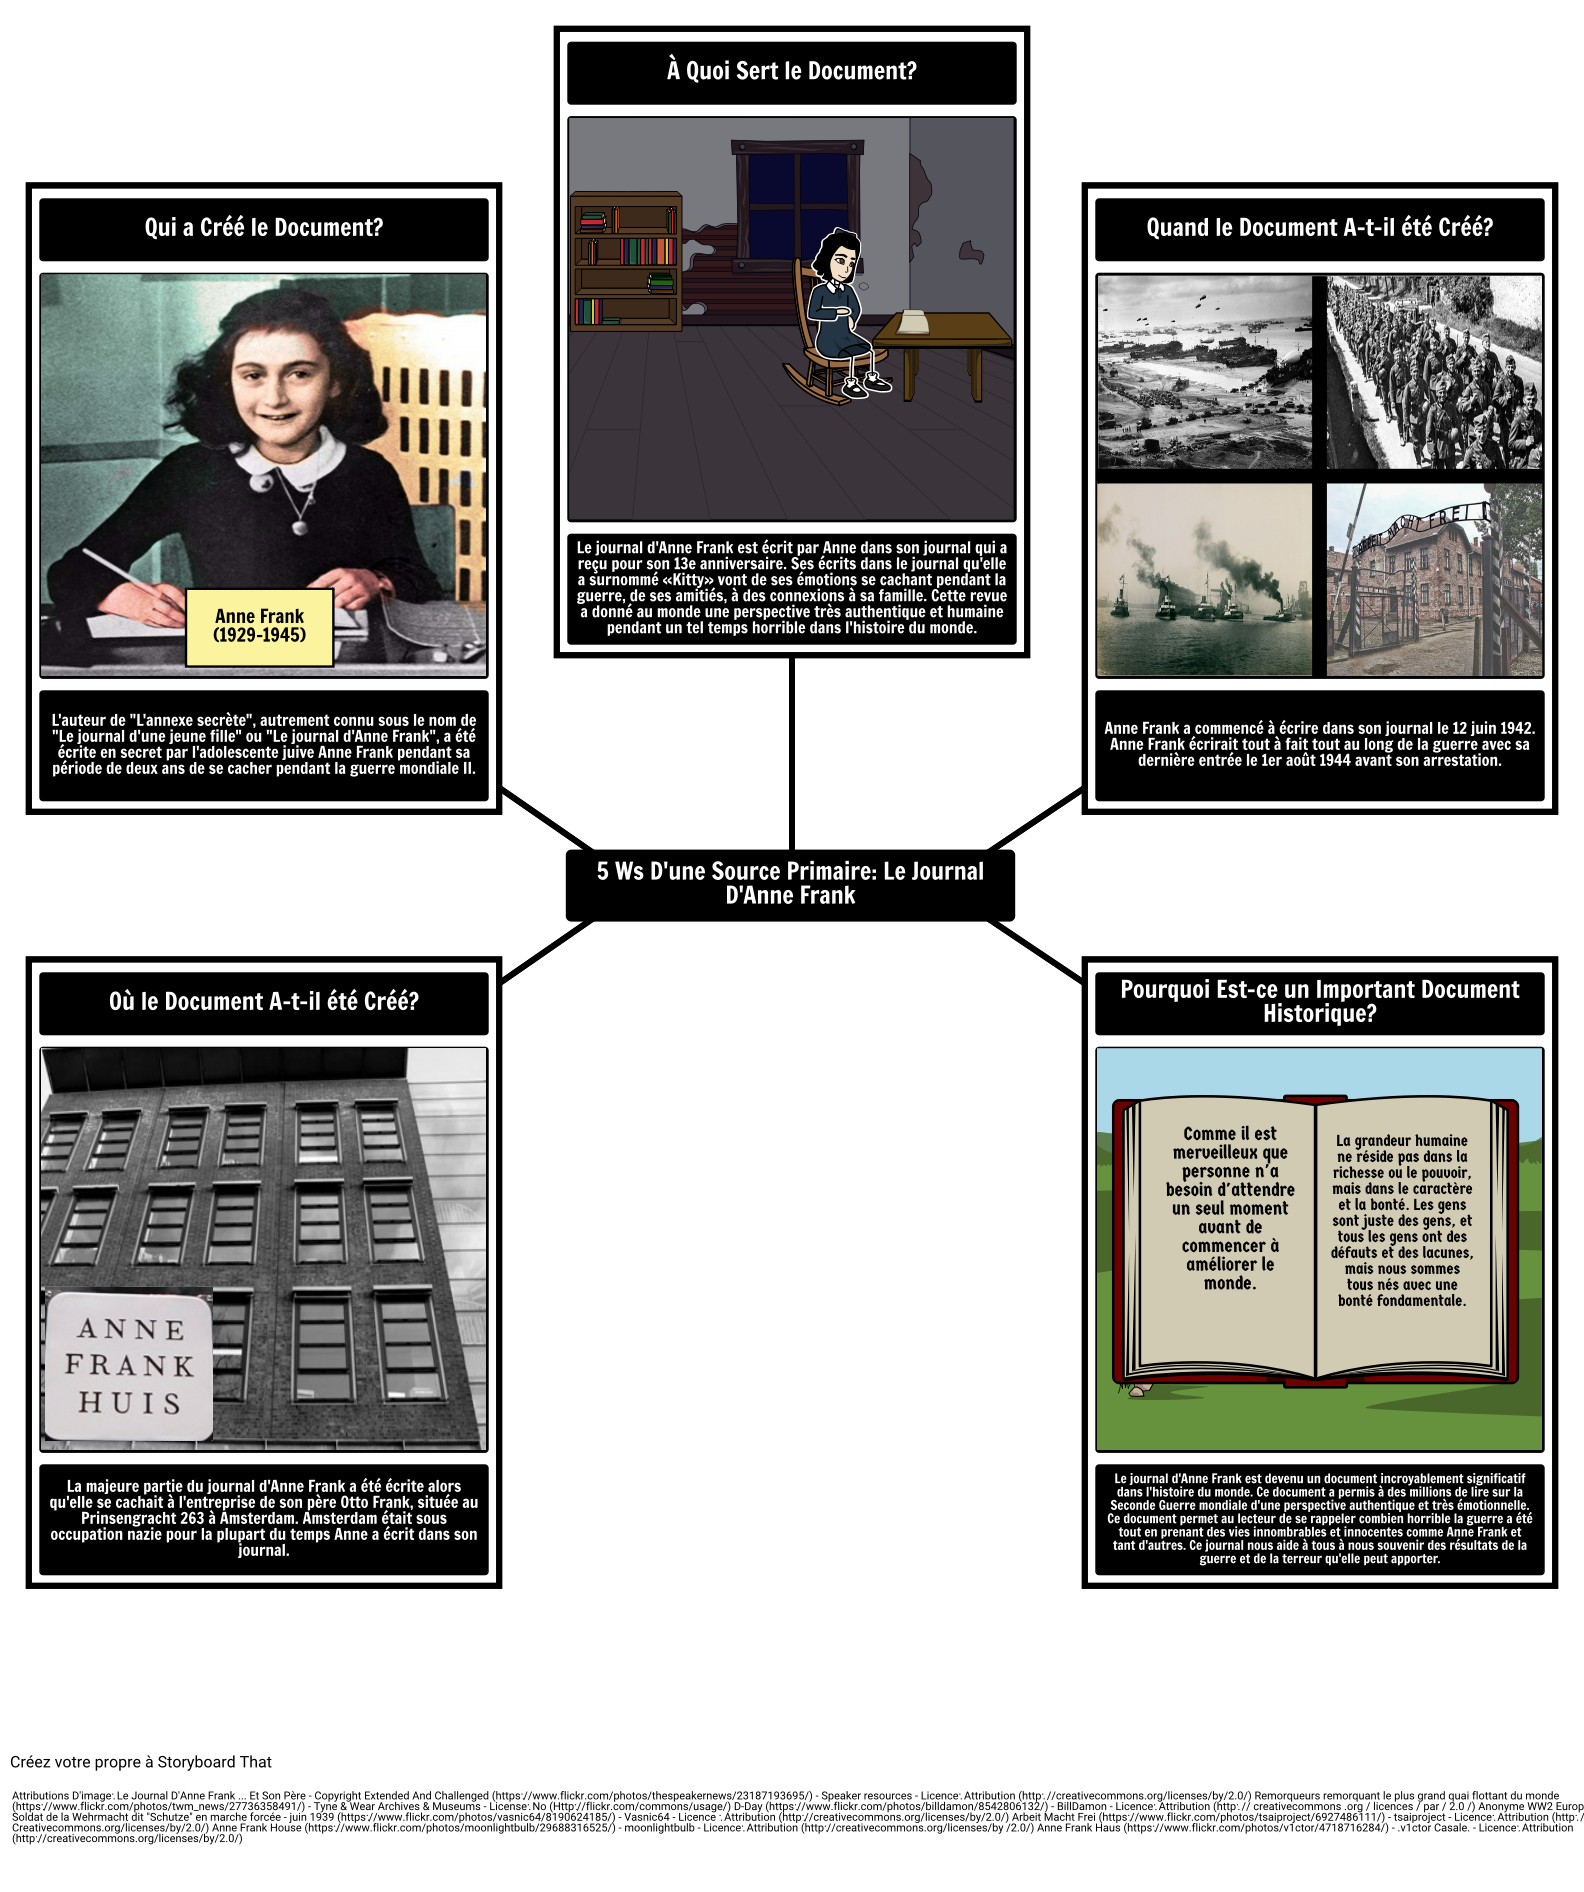 Source primaire 5Ws: Le Journal d'Anne Frank